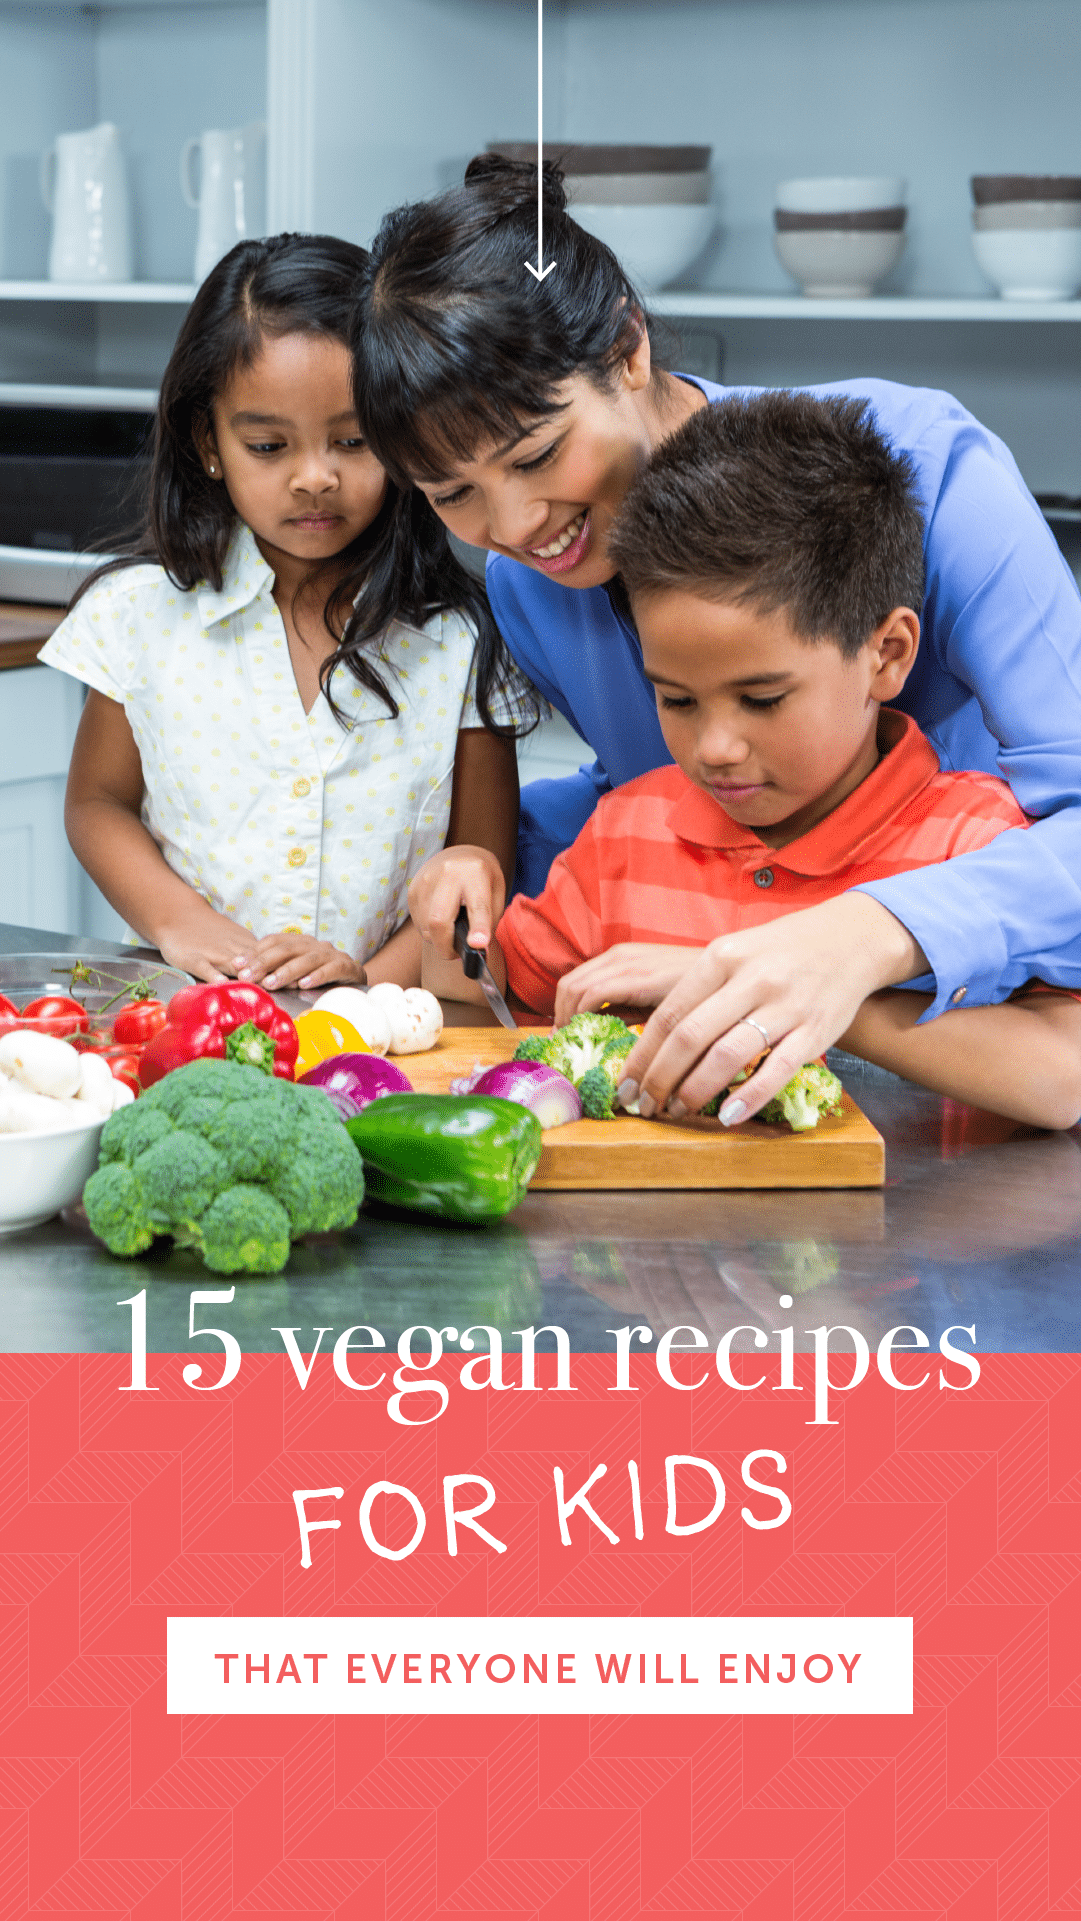 15 Vegan Recipes for Kids That Everyone Will Enjoy